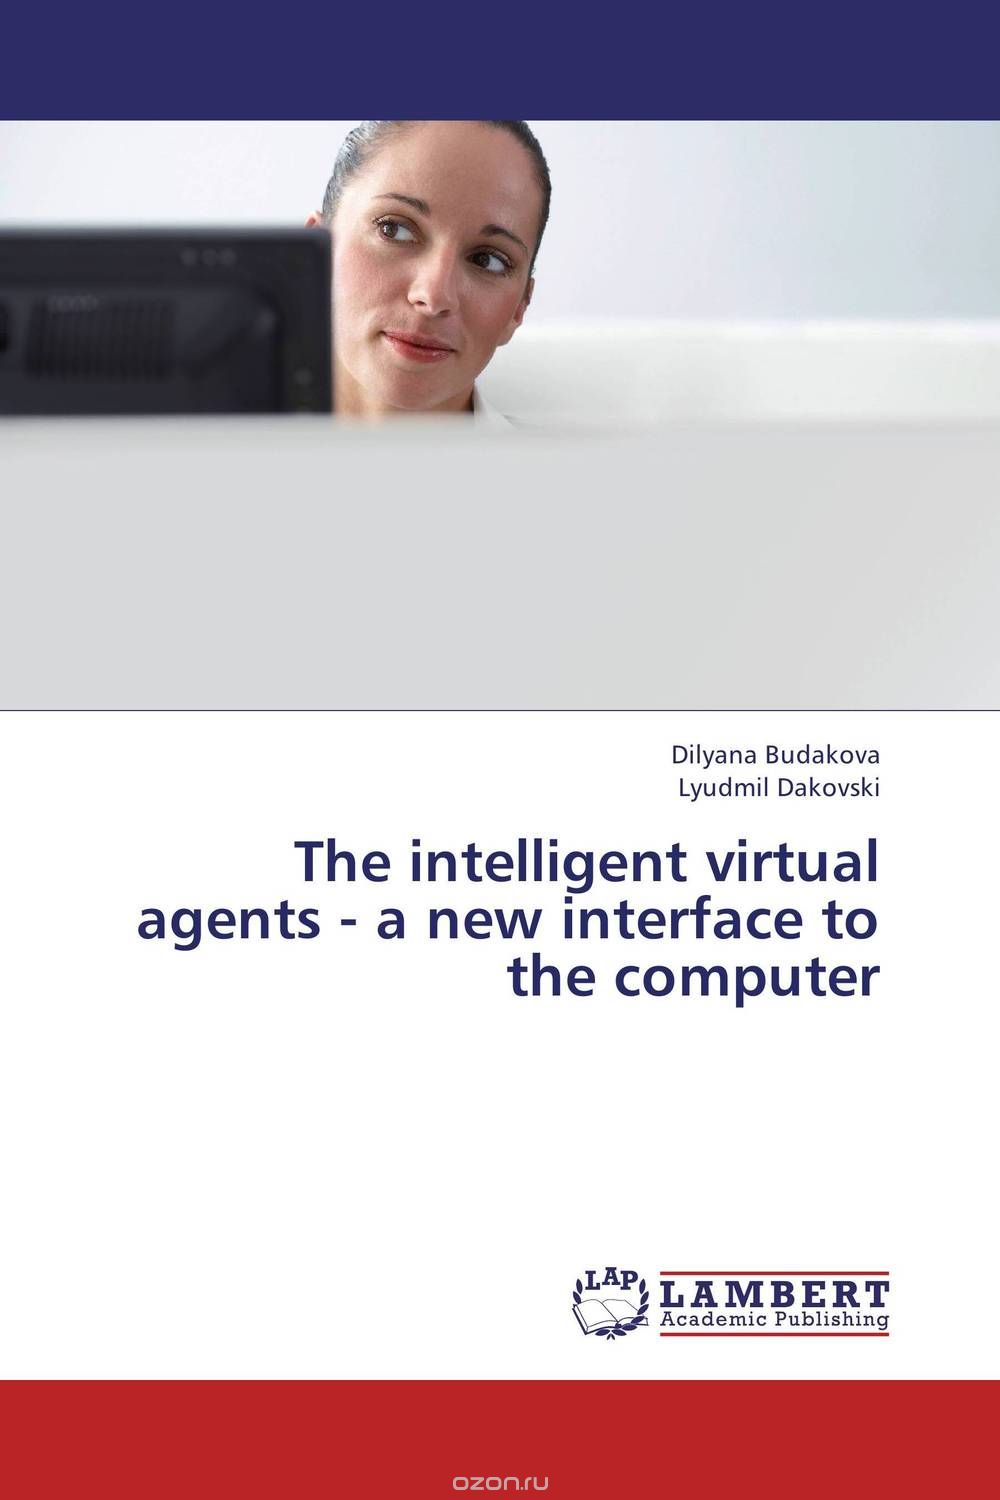 Скачать книгу "The intelligent virtual agents - a new interface to the computer"